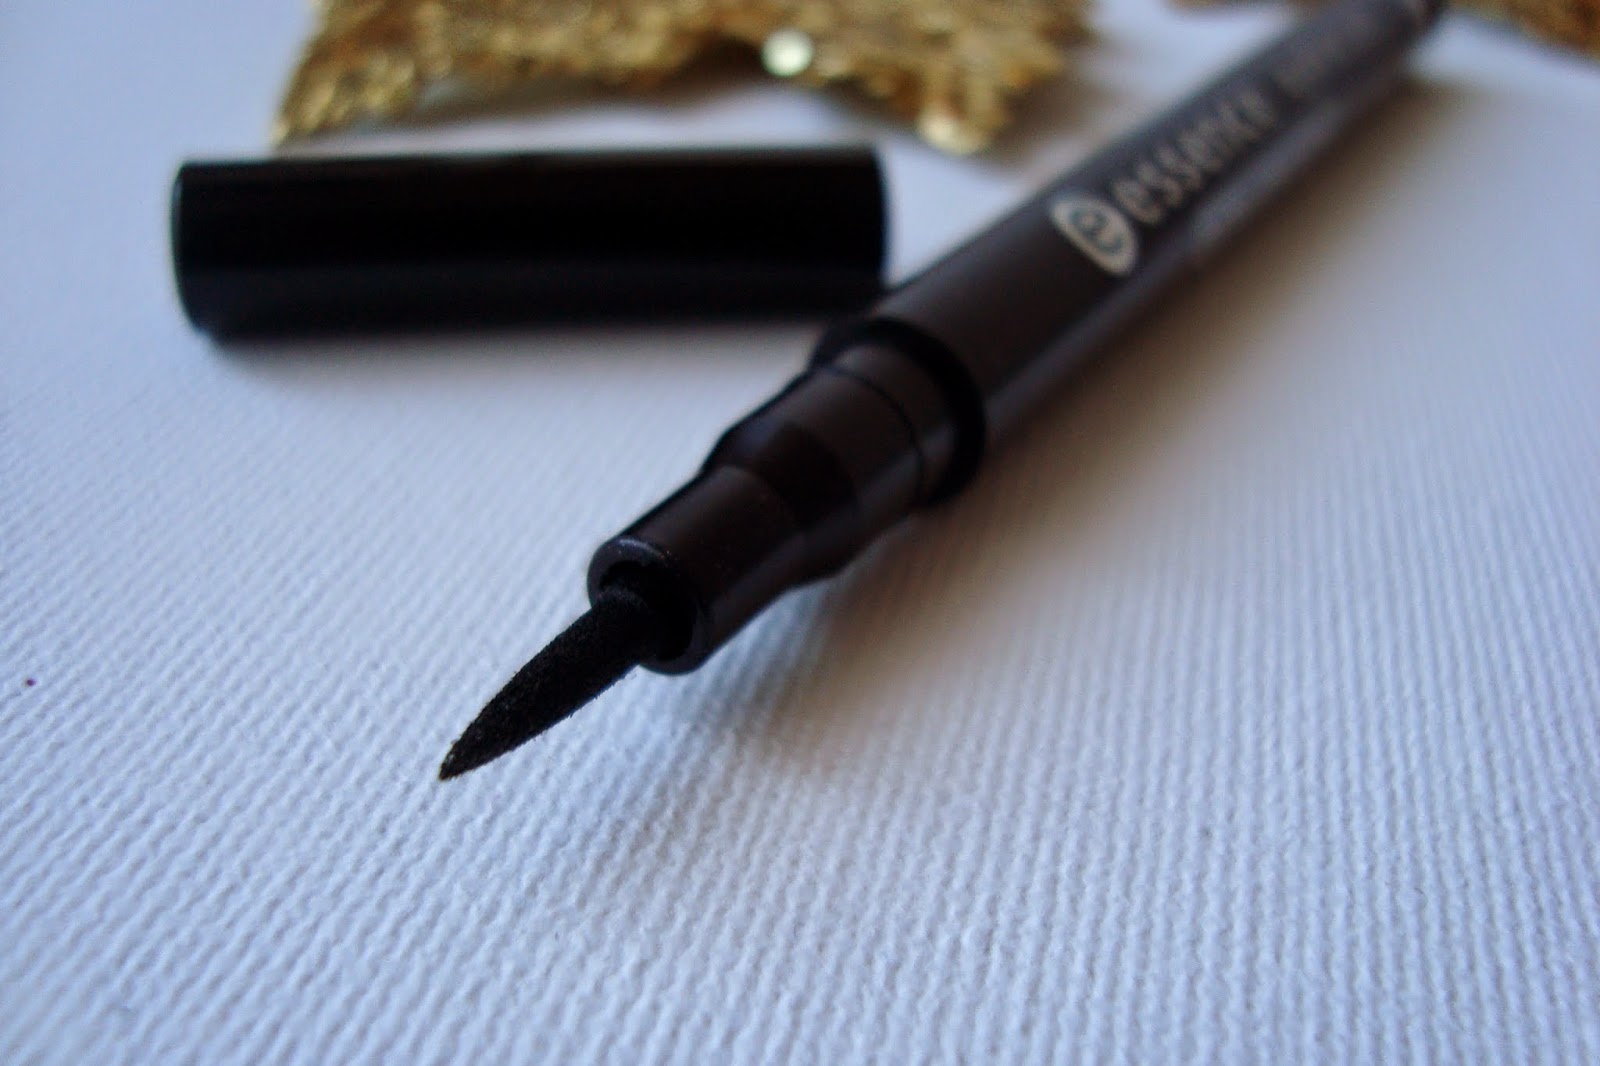 Essence Eyeliner Pen 